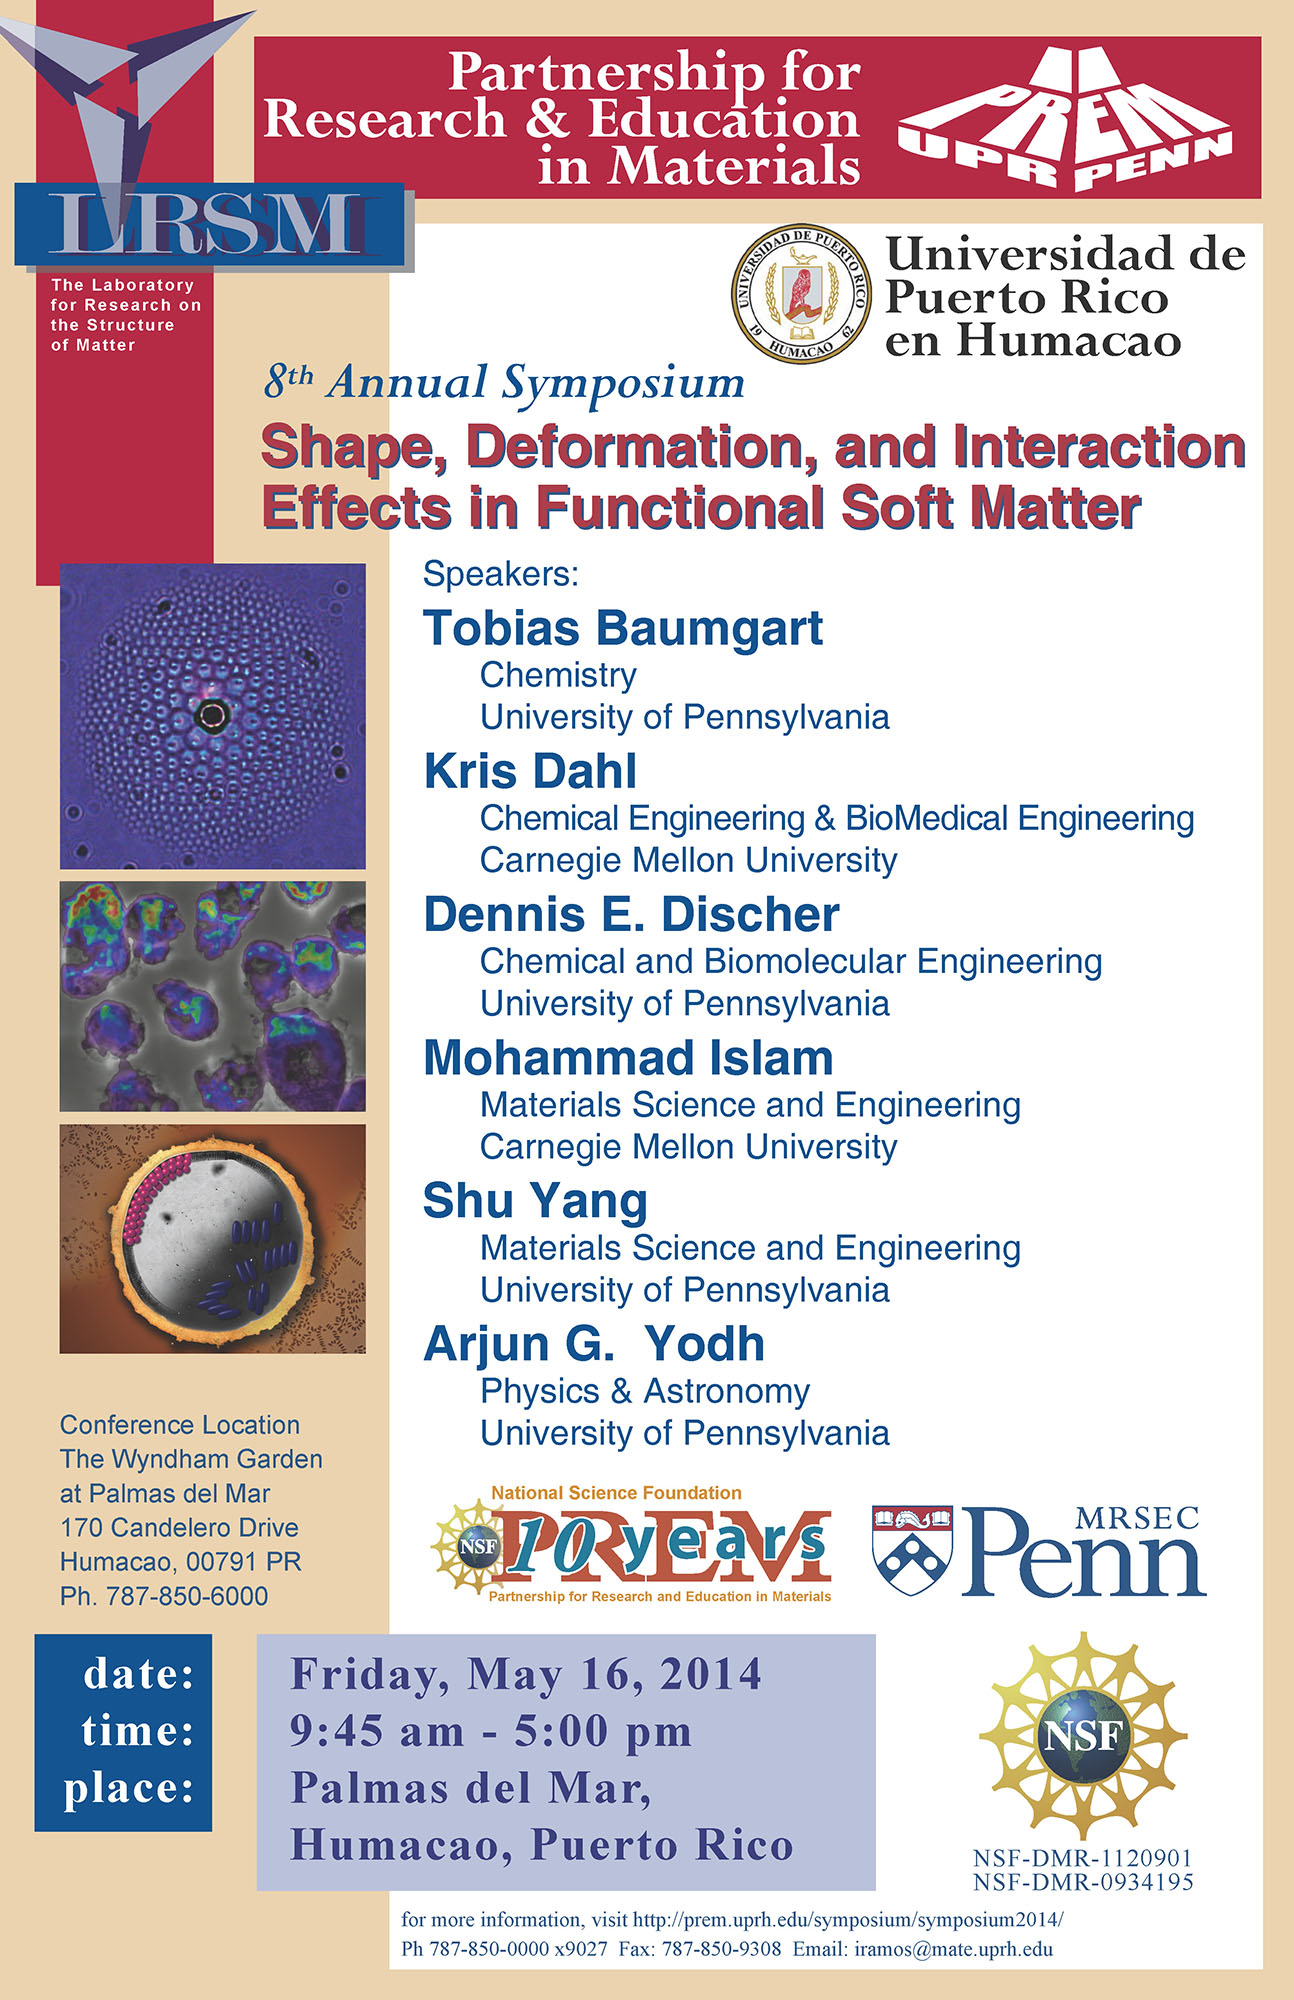 PREM Symposium 5.16.14 poster